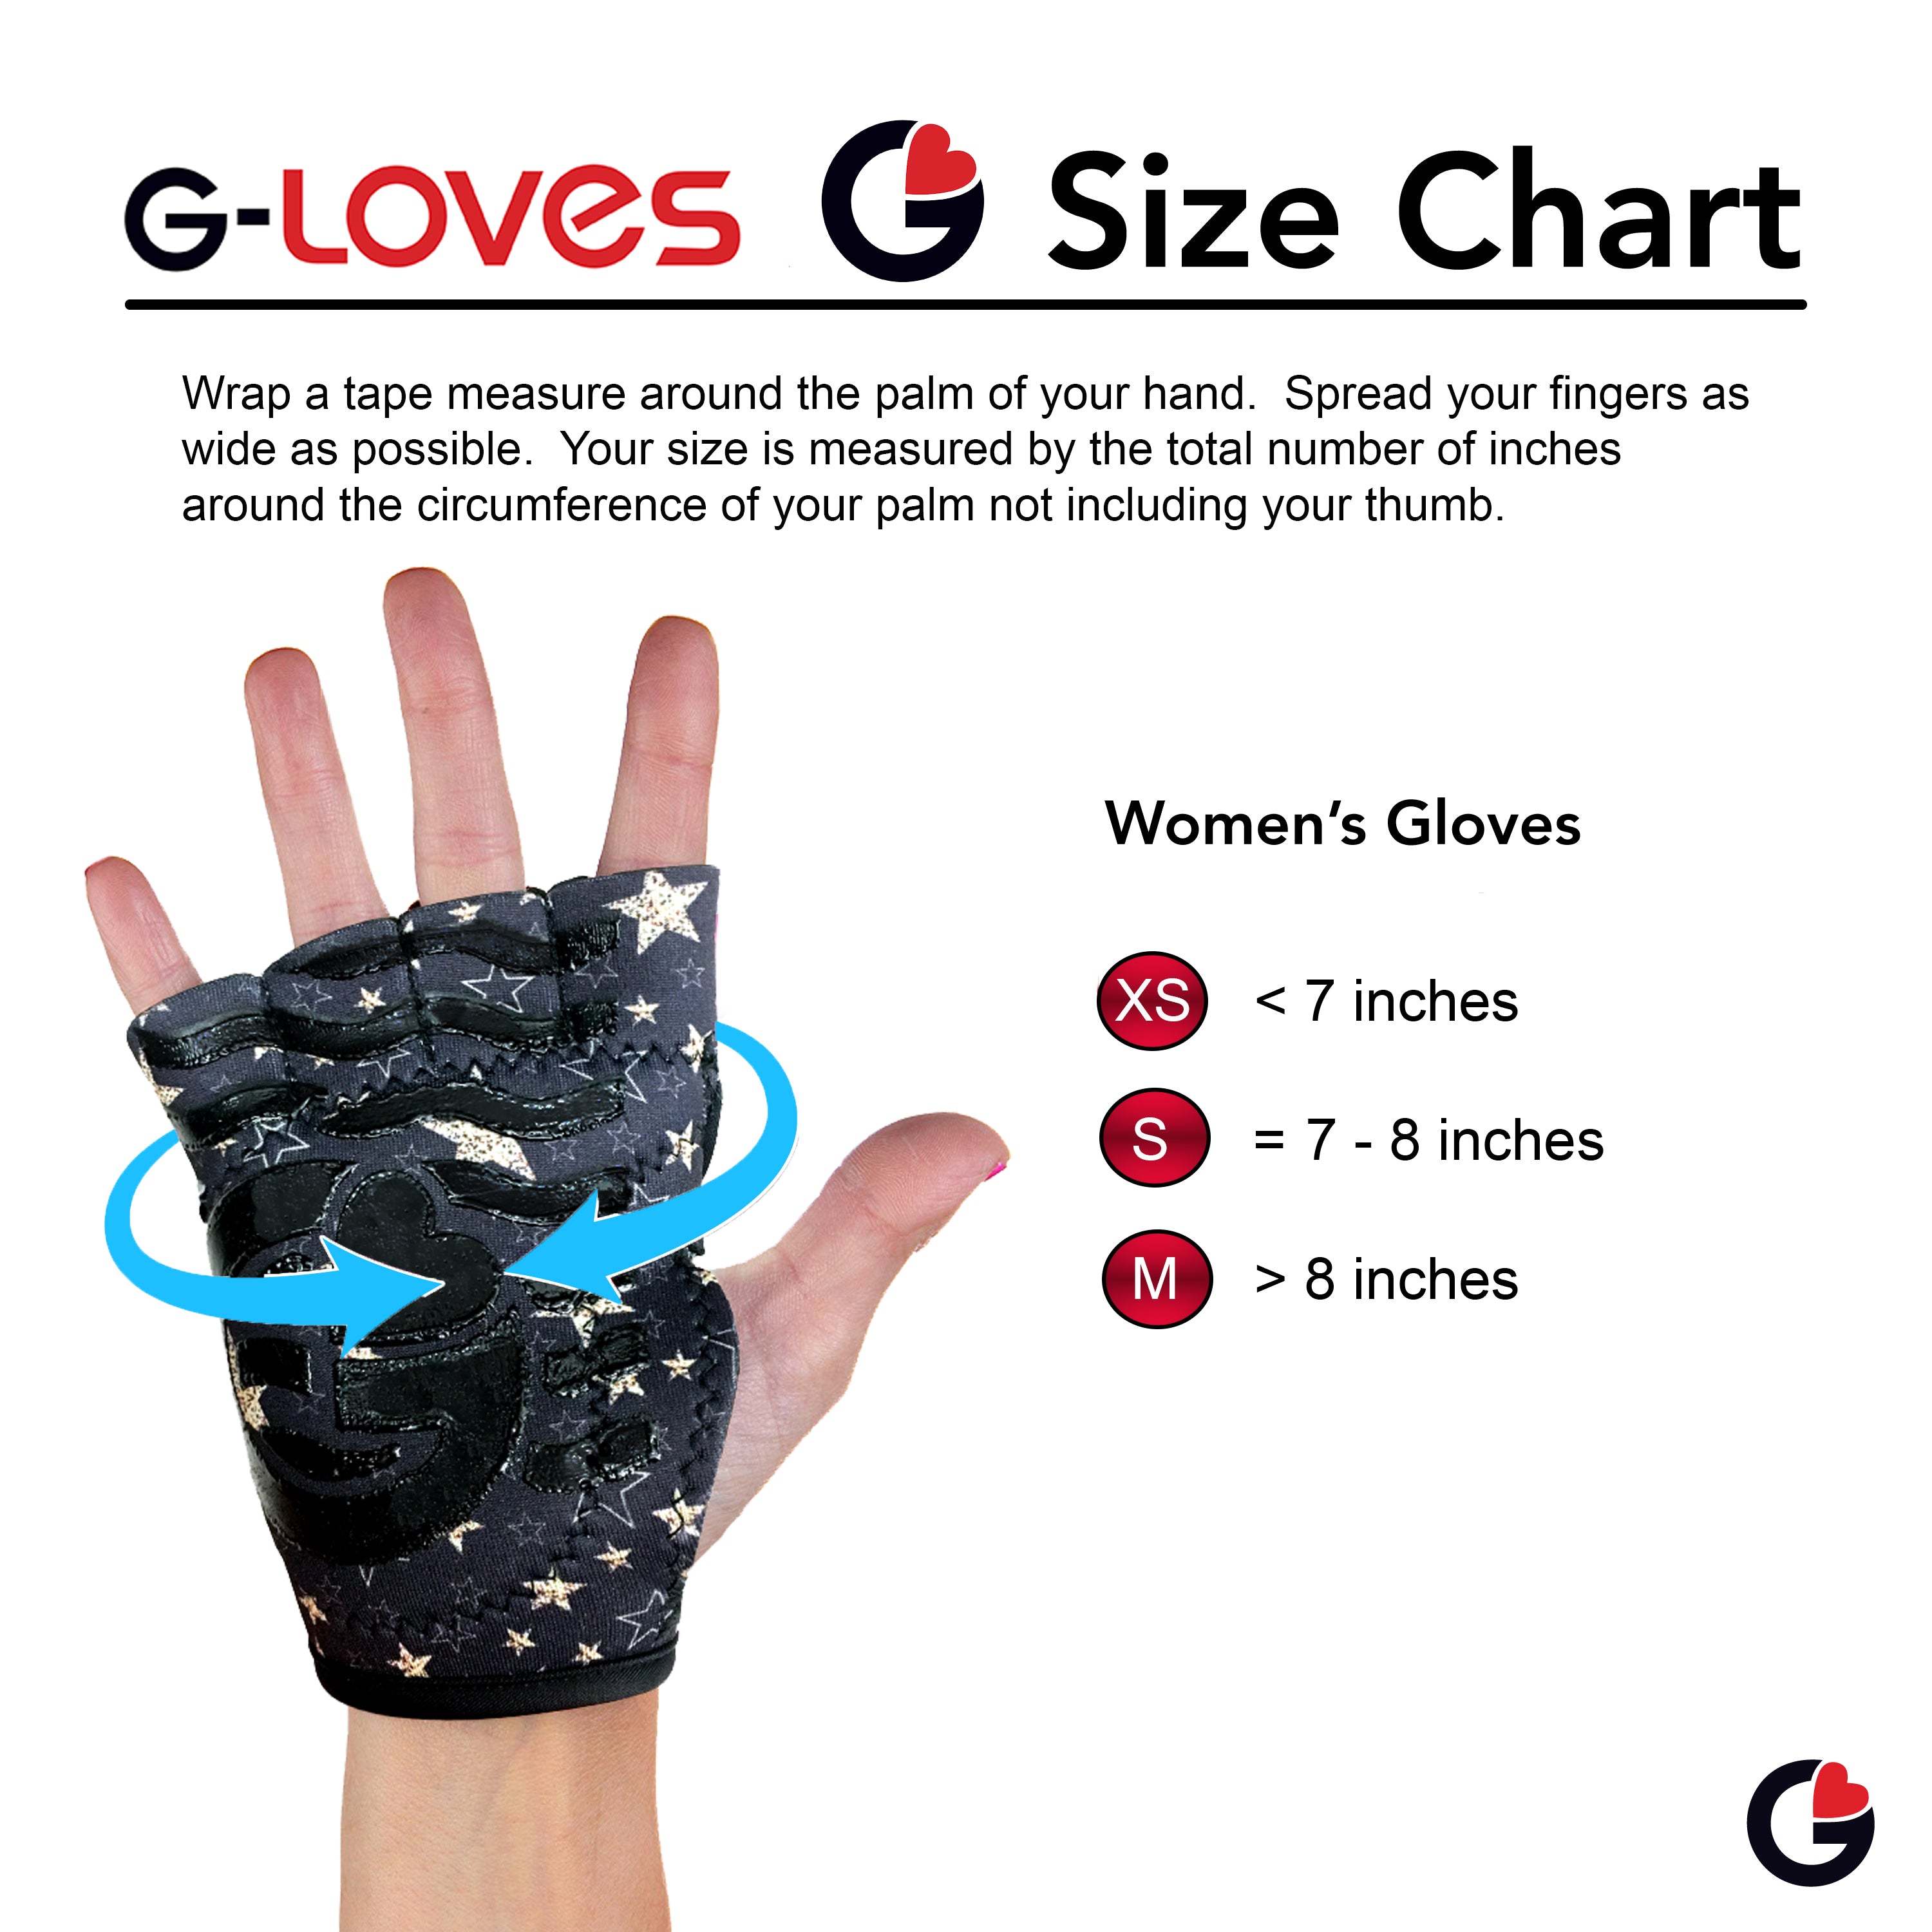 Rock Star Leopard Gloves